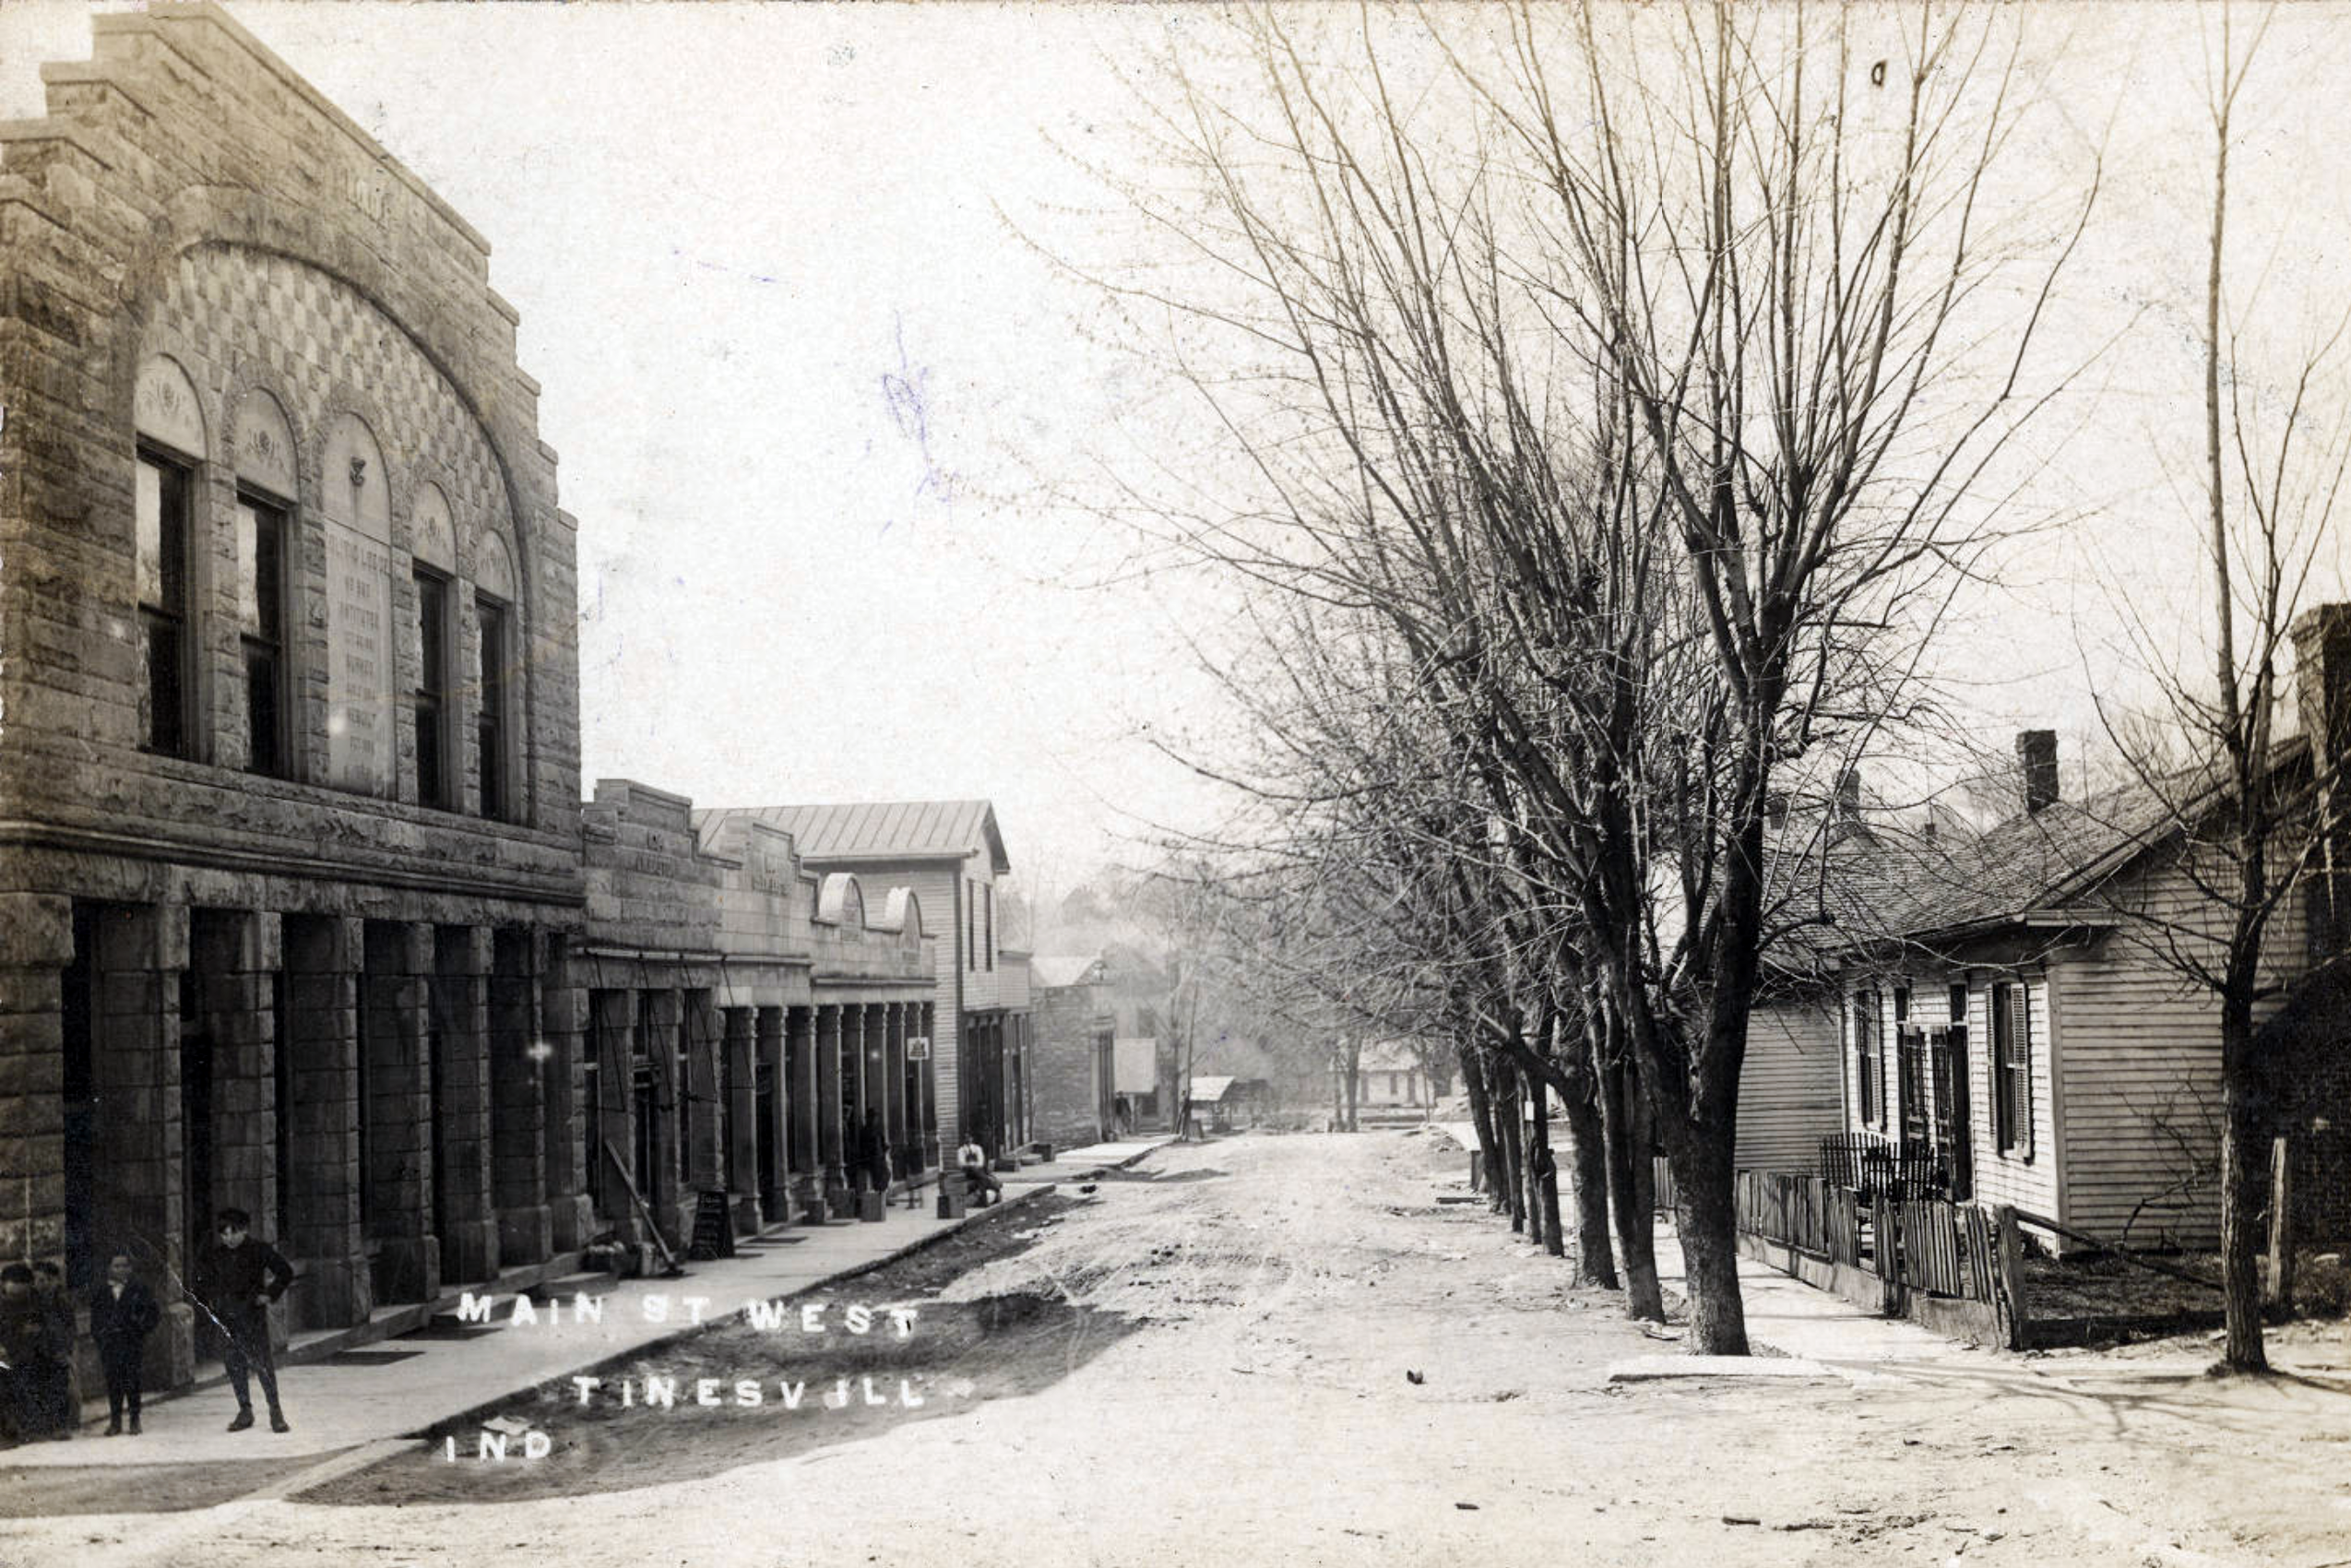 Stinesville, 1900 or so